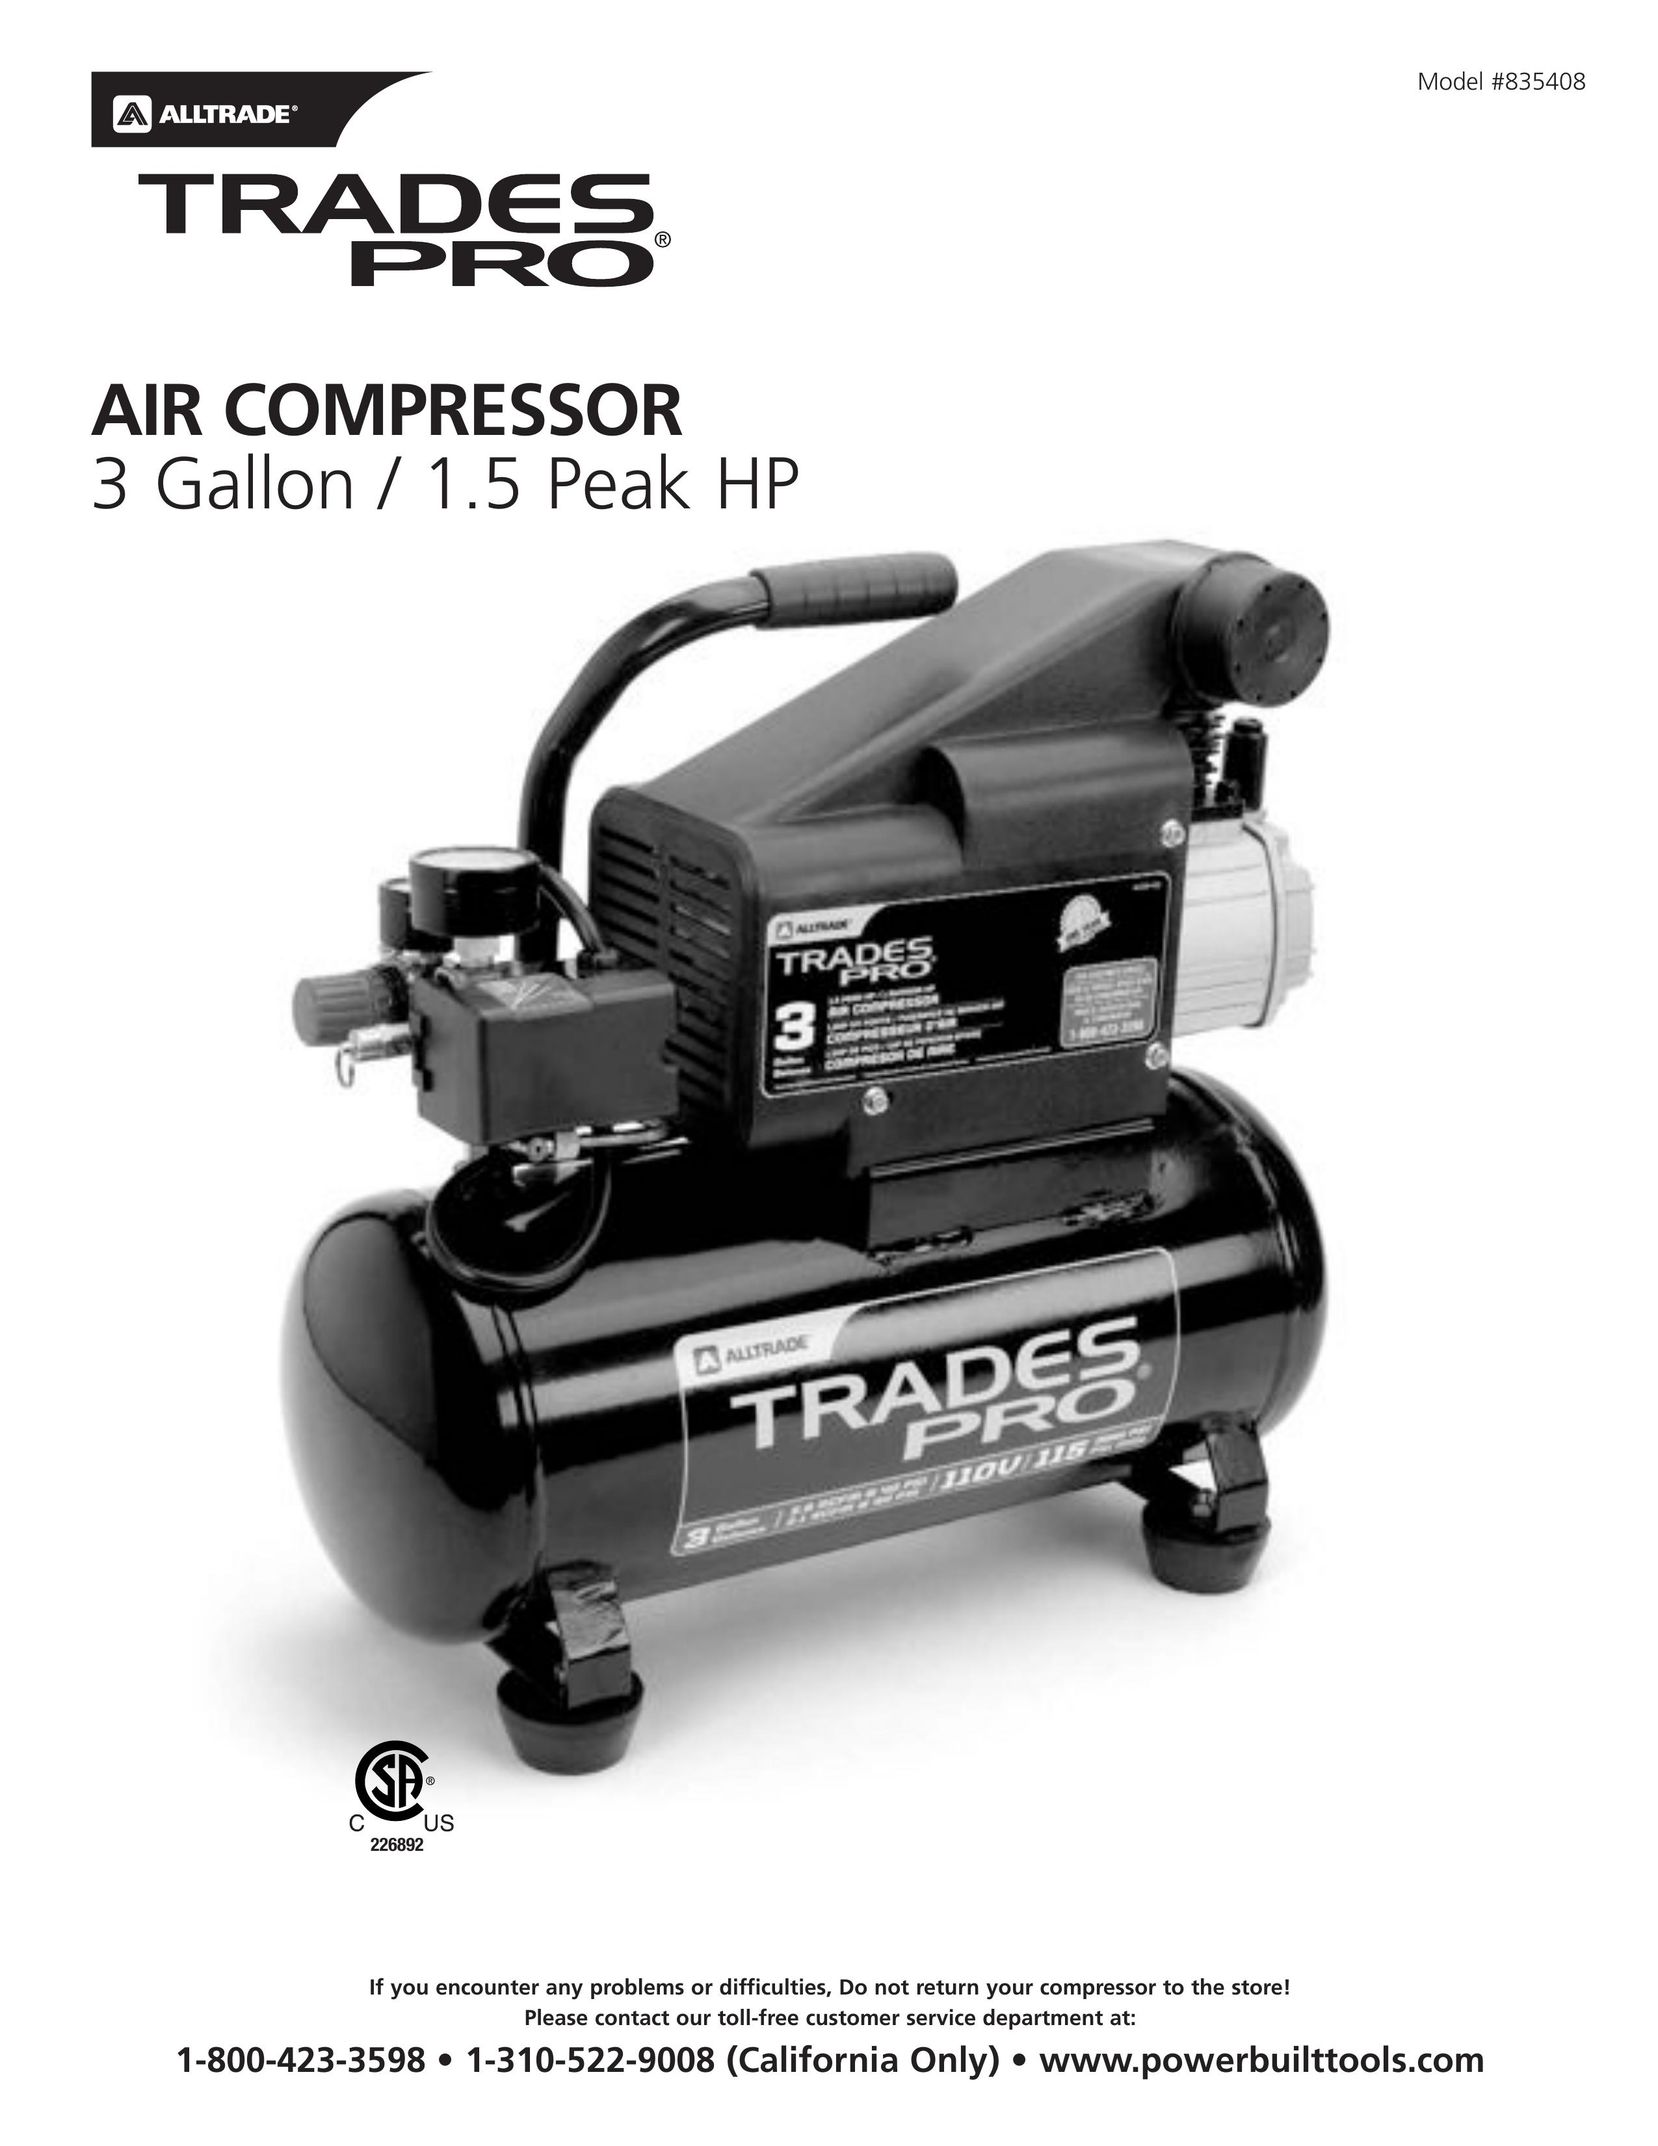 AllTrade 835408 Air Compressor User Manual